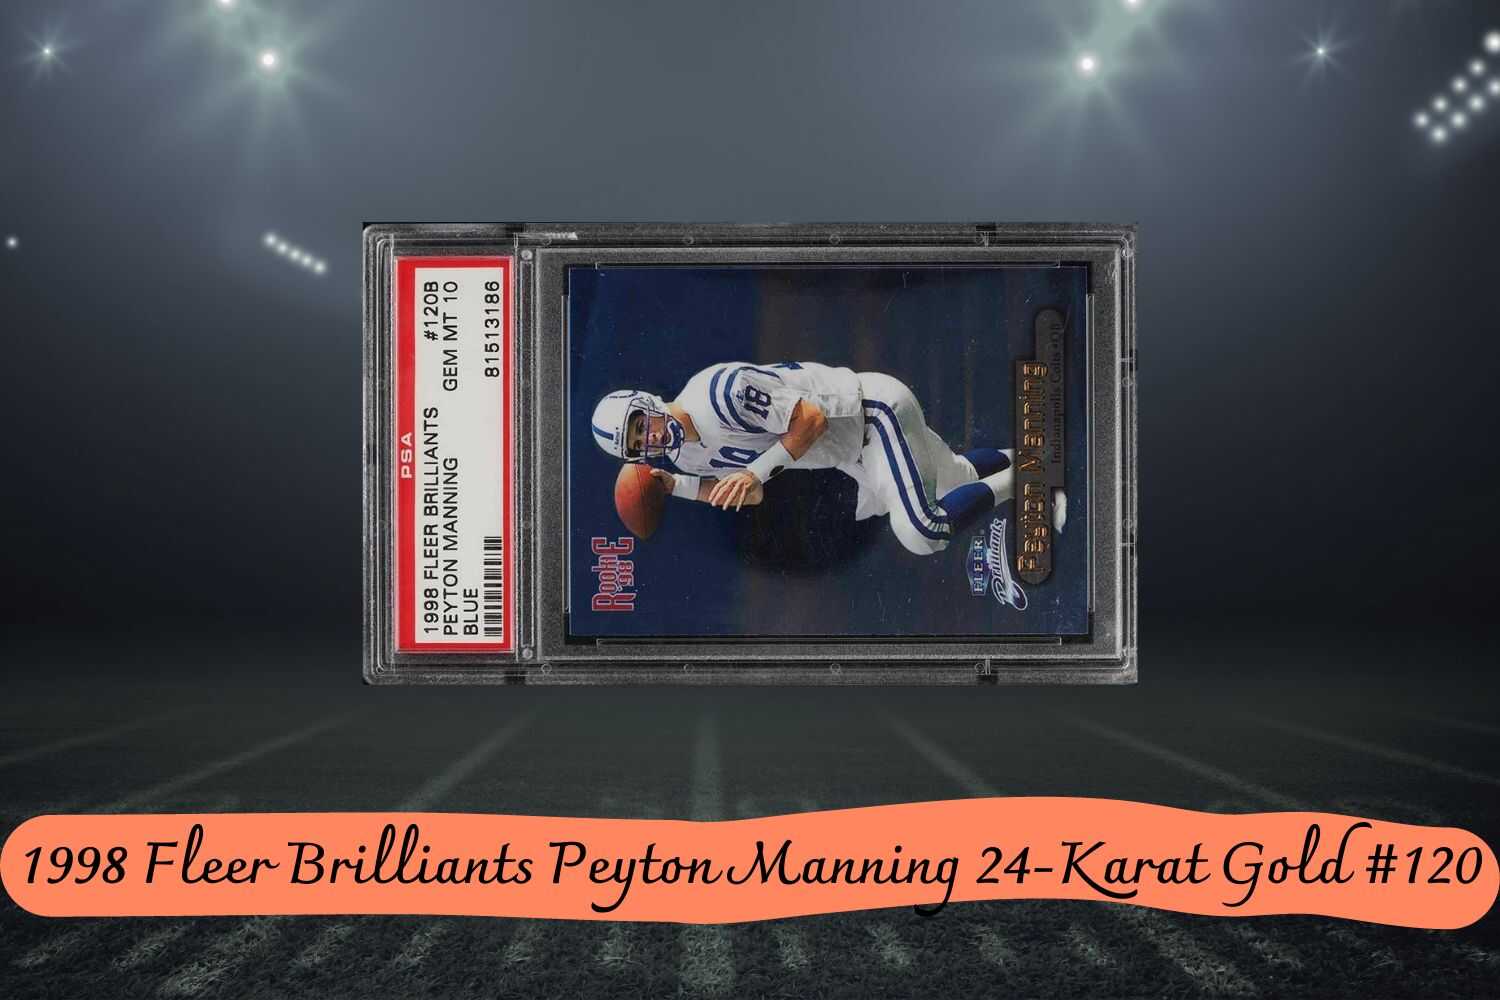 #12 1998 Fleer Brilliants Peyton Manning 24-Karat Gold #120 - Estimate value: $6,000